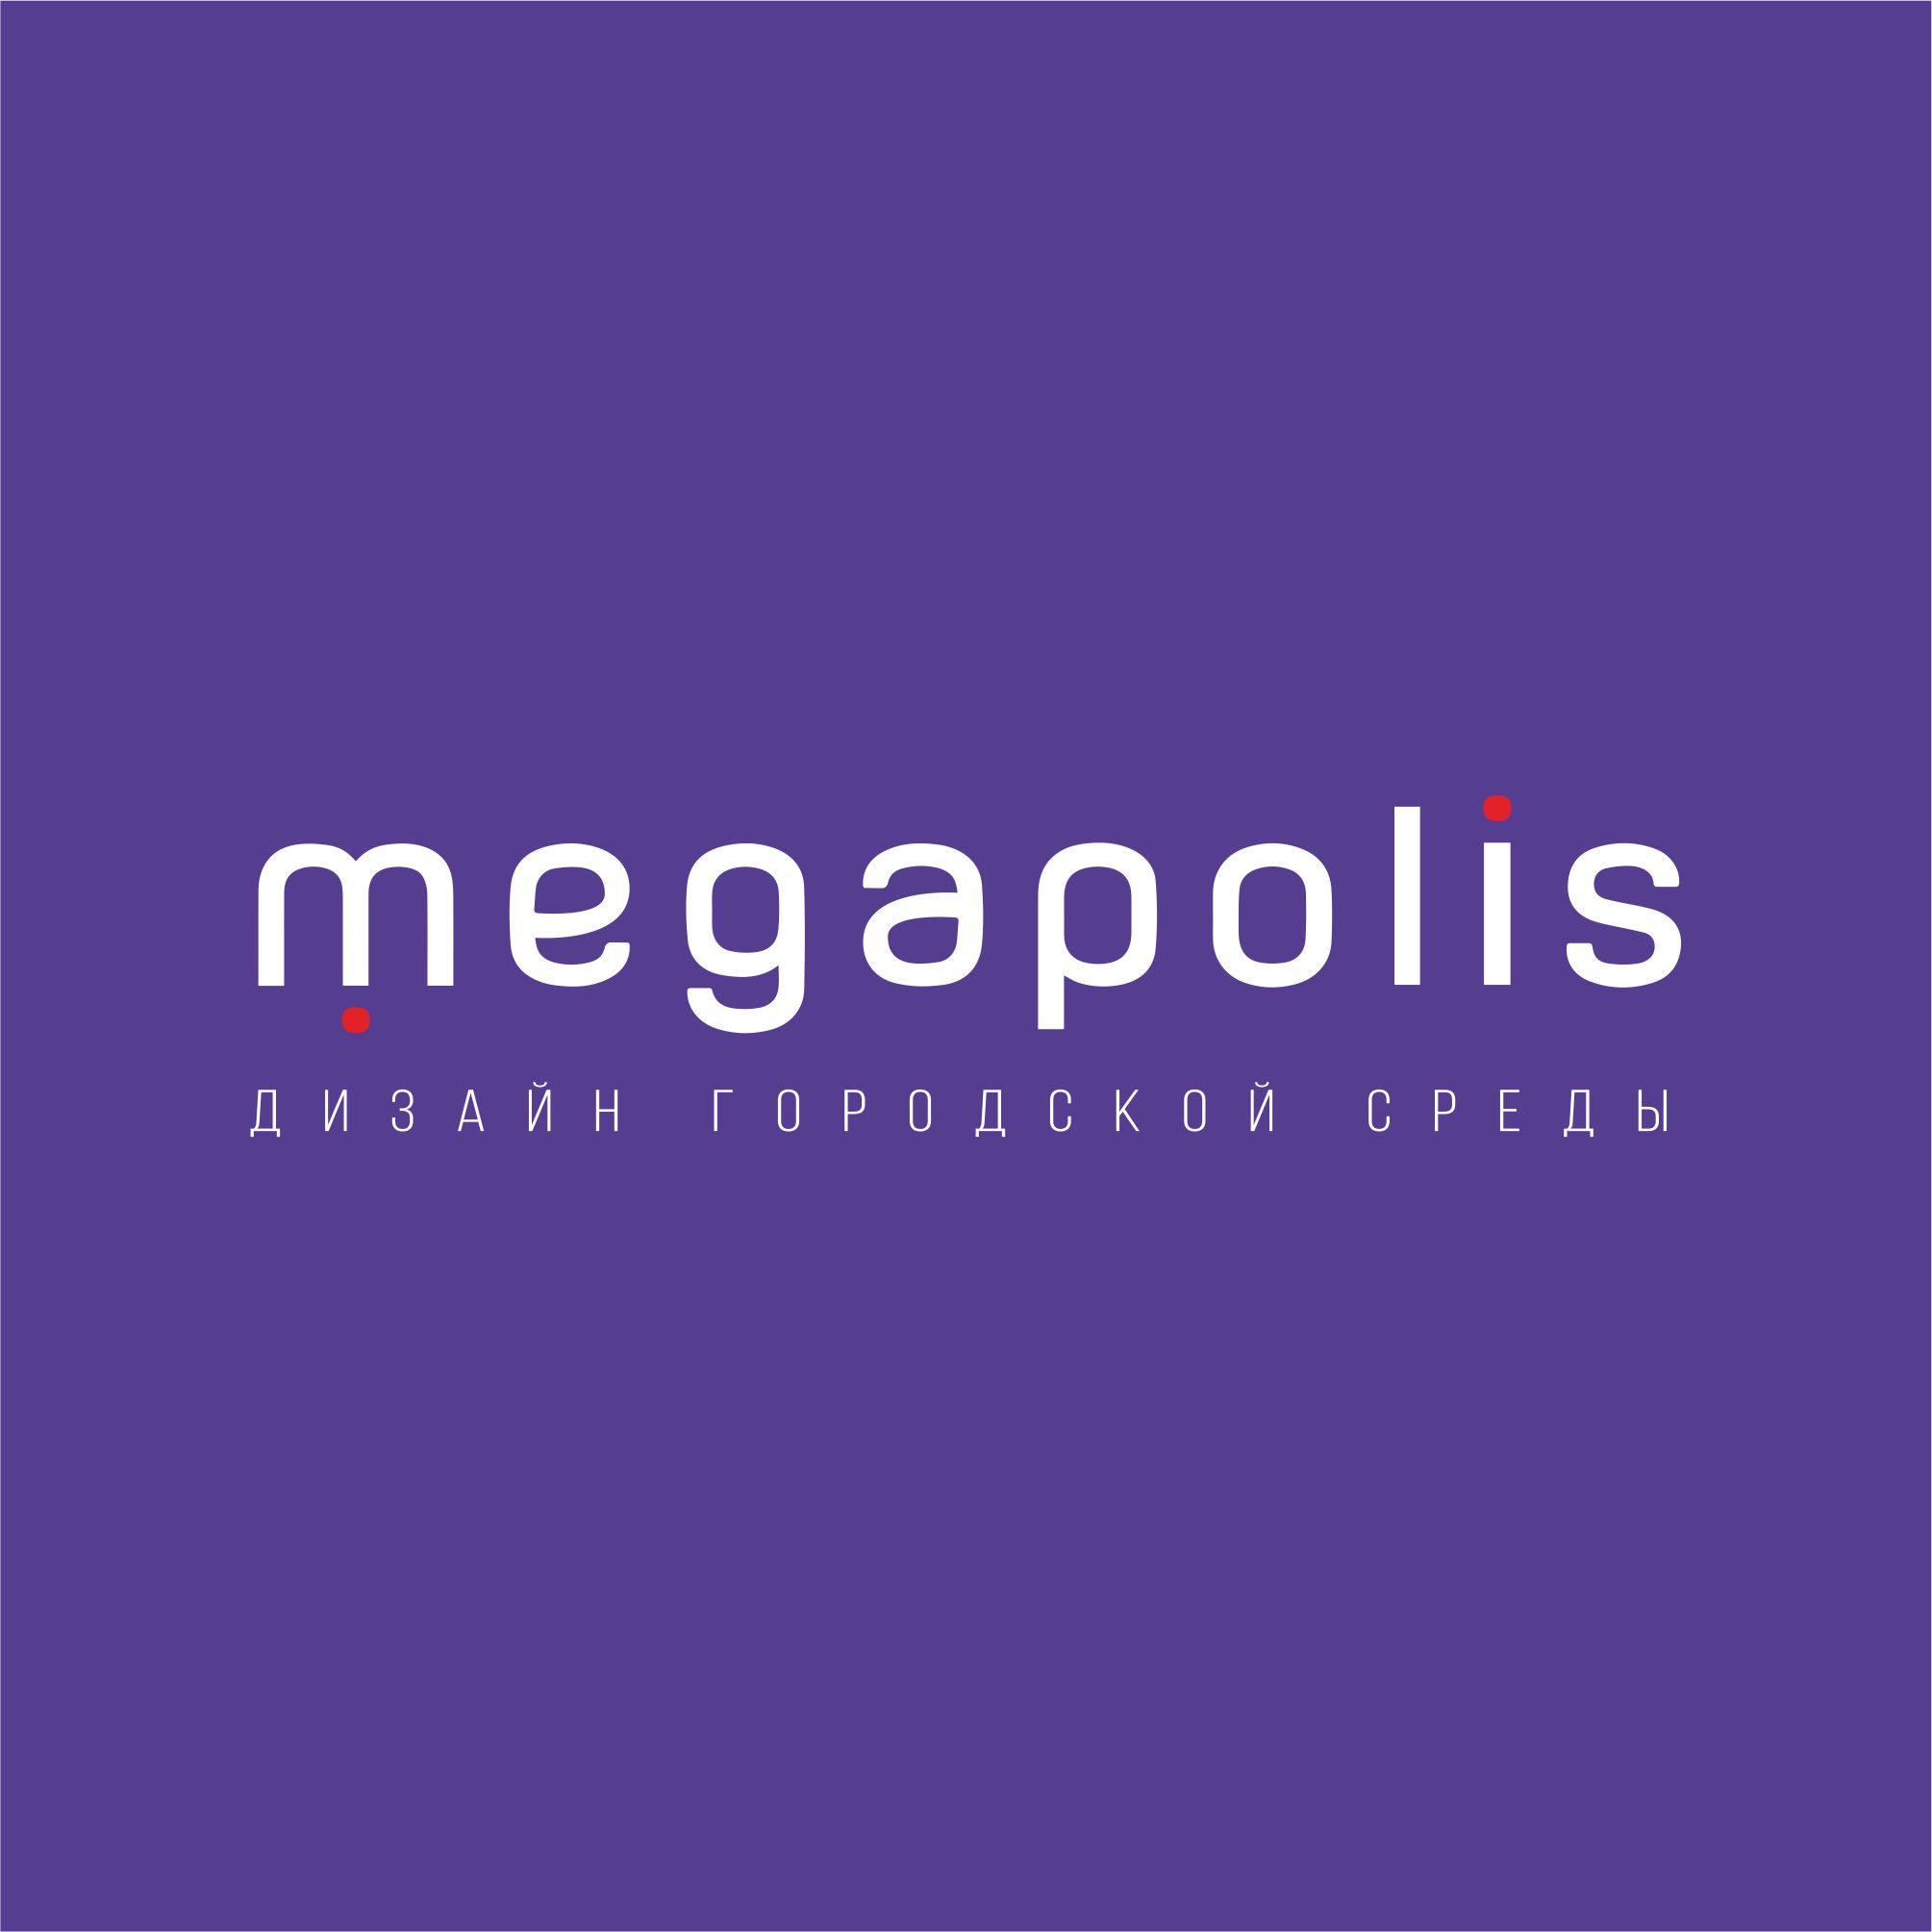 Мегаполис, Группа компаний